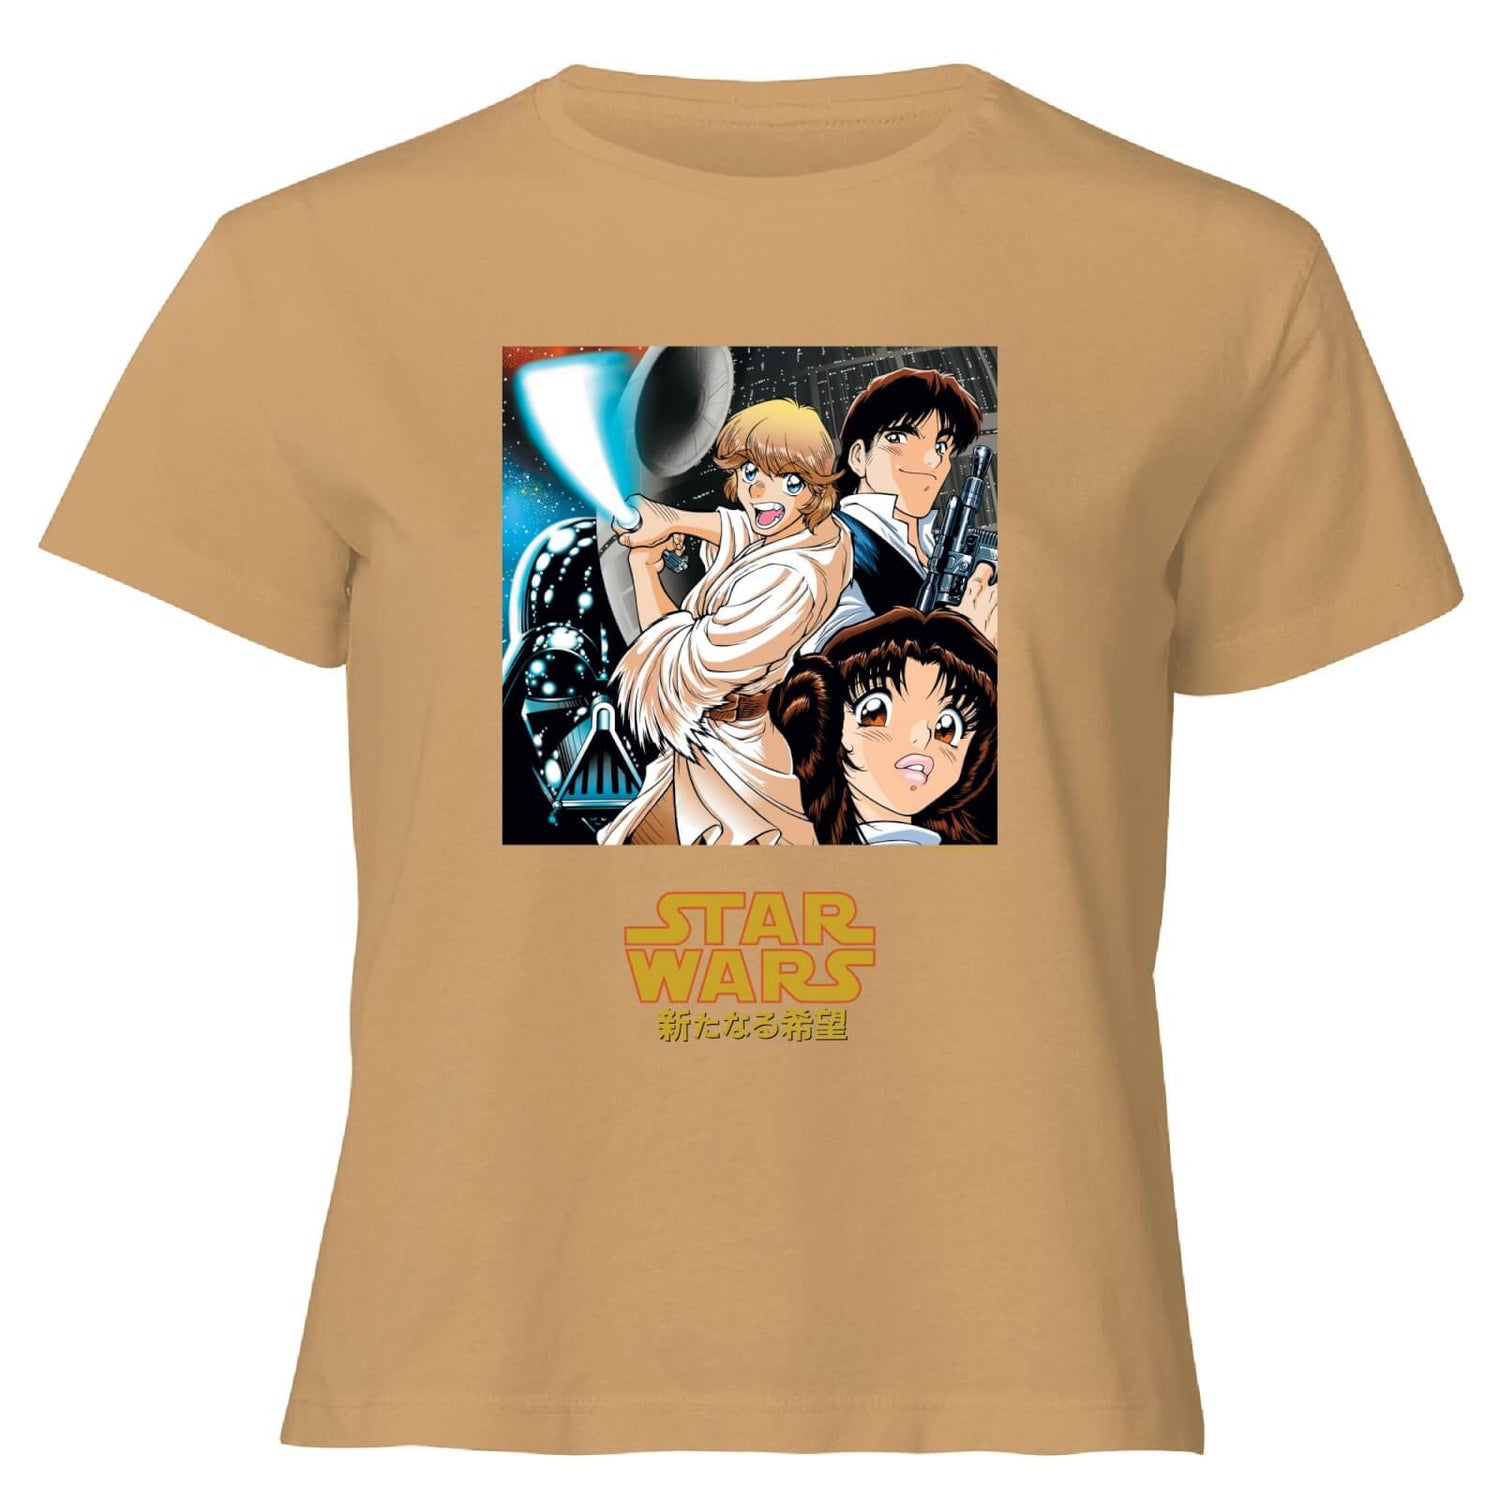 Star Wars Manga Style Women's Cropped T-Shirt - Tan